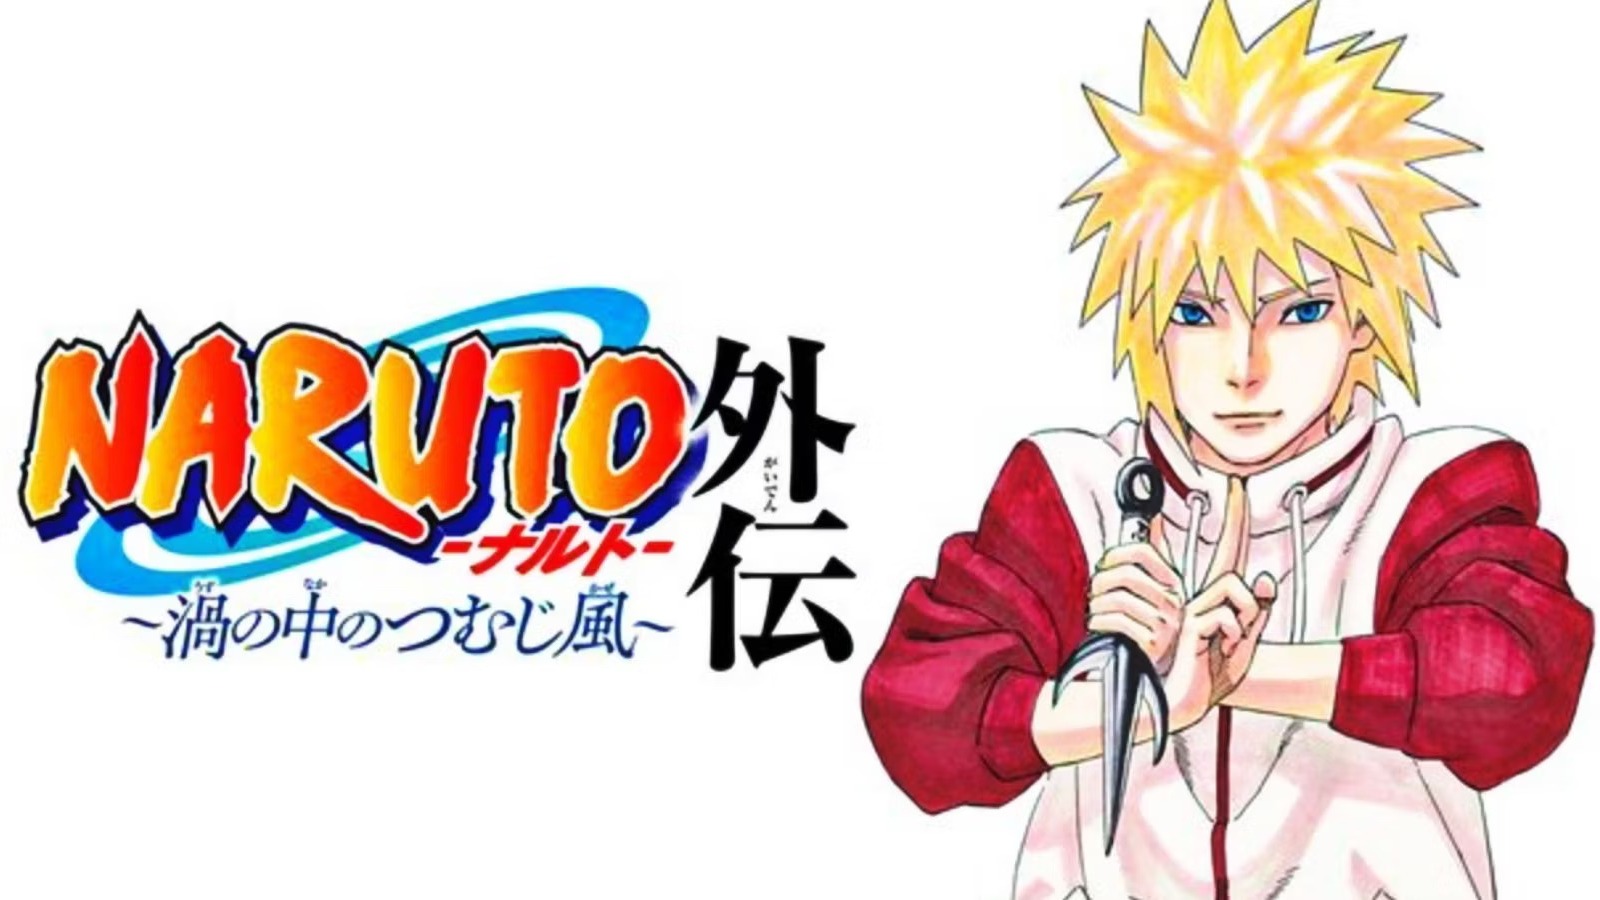 Manga 1-Shot About Naruto's Father Slated for July 18 - News